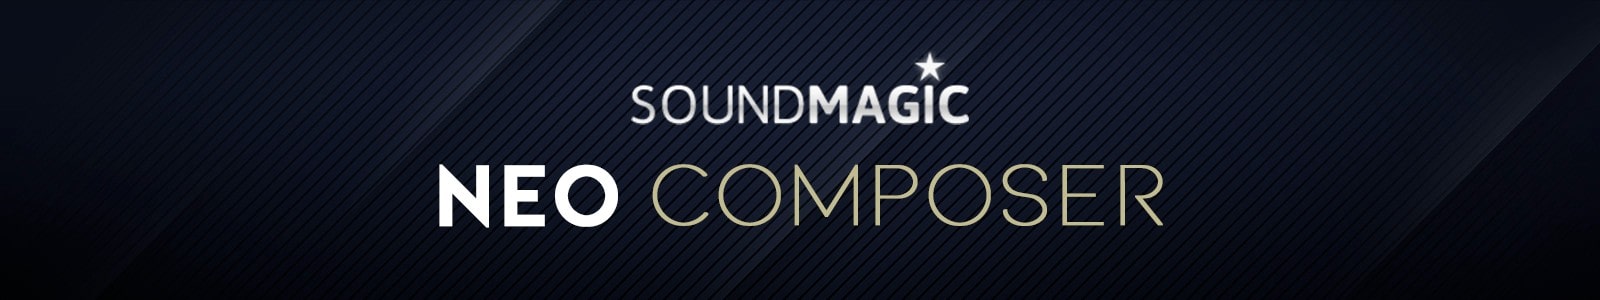 SoundMagic Neo Composer